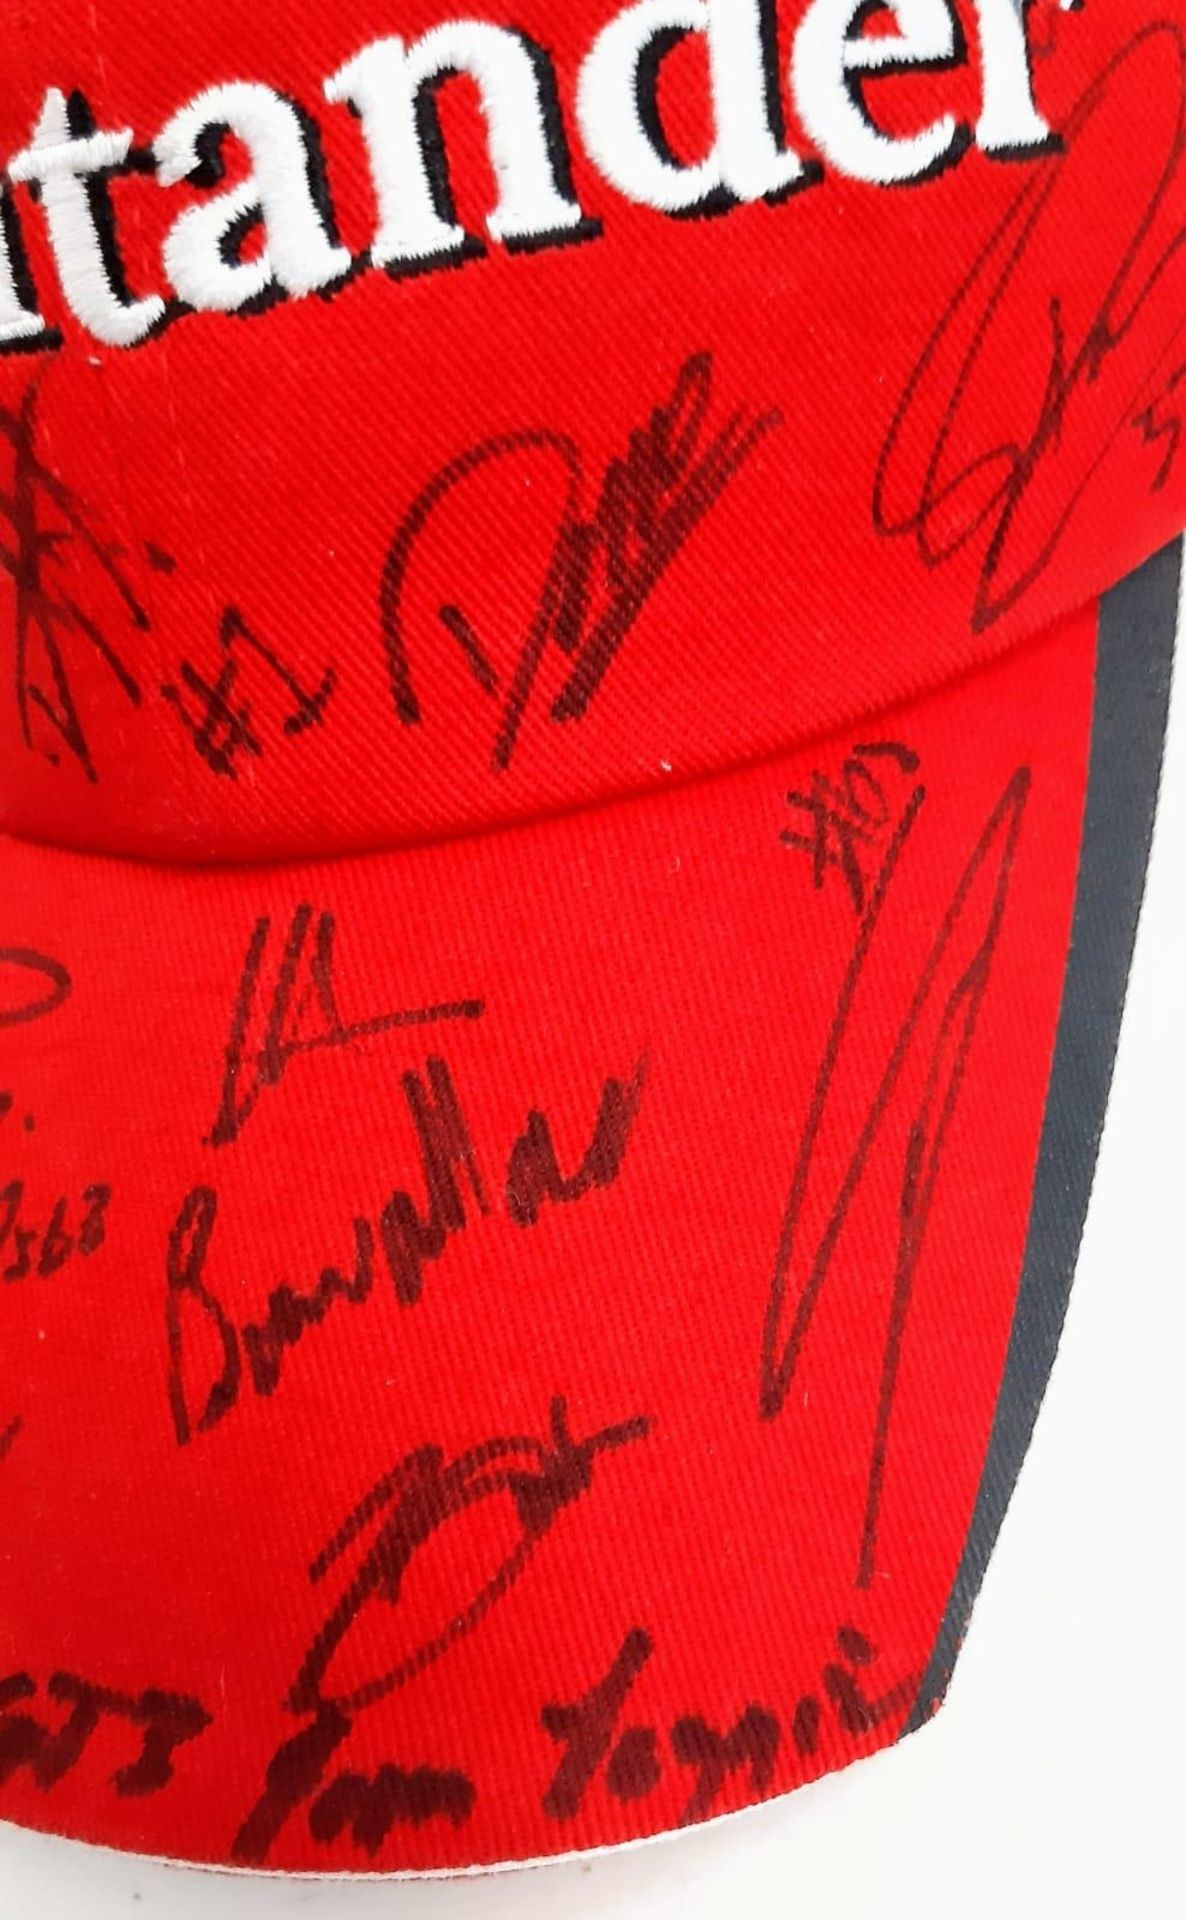 An Official Ferrari Team Cap - Over 20 signatures including Ferrari drivers and team principals. - Image 8 of 14